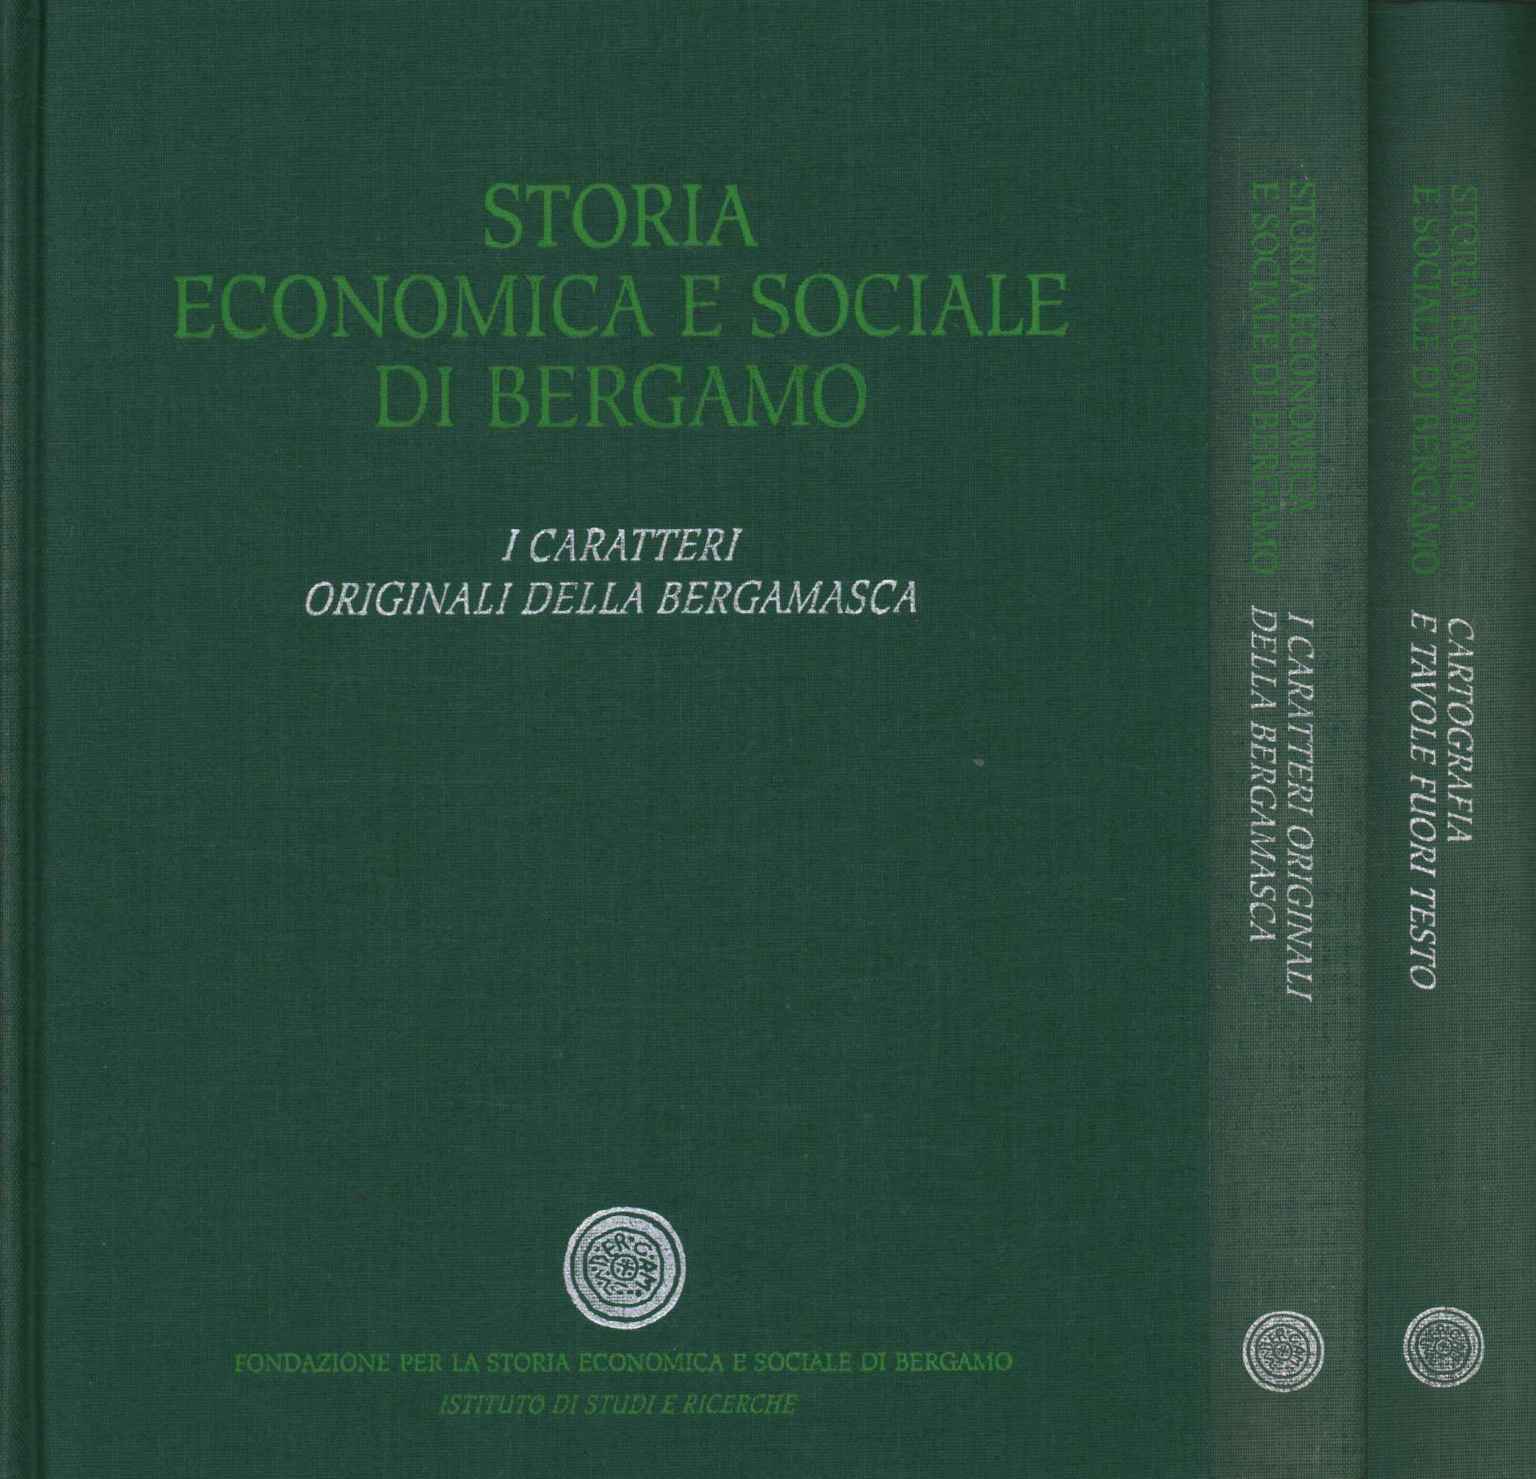 Economic and social history of Bergamo